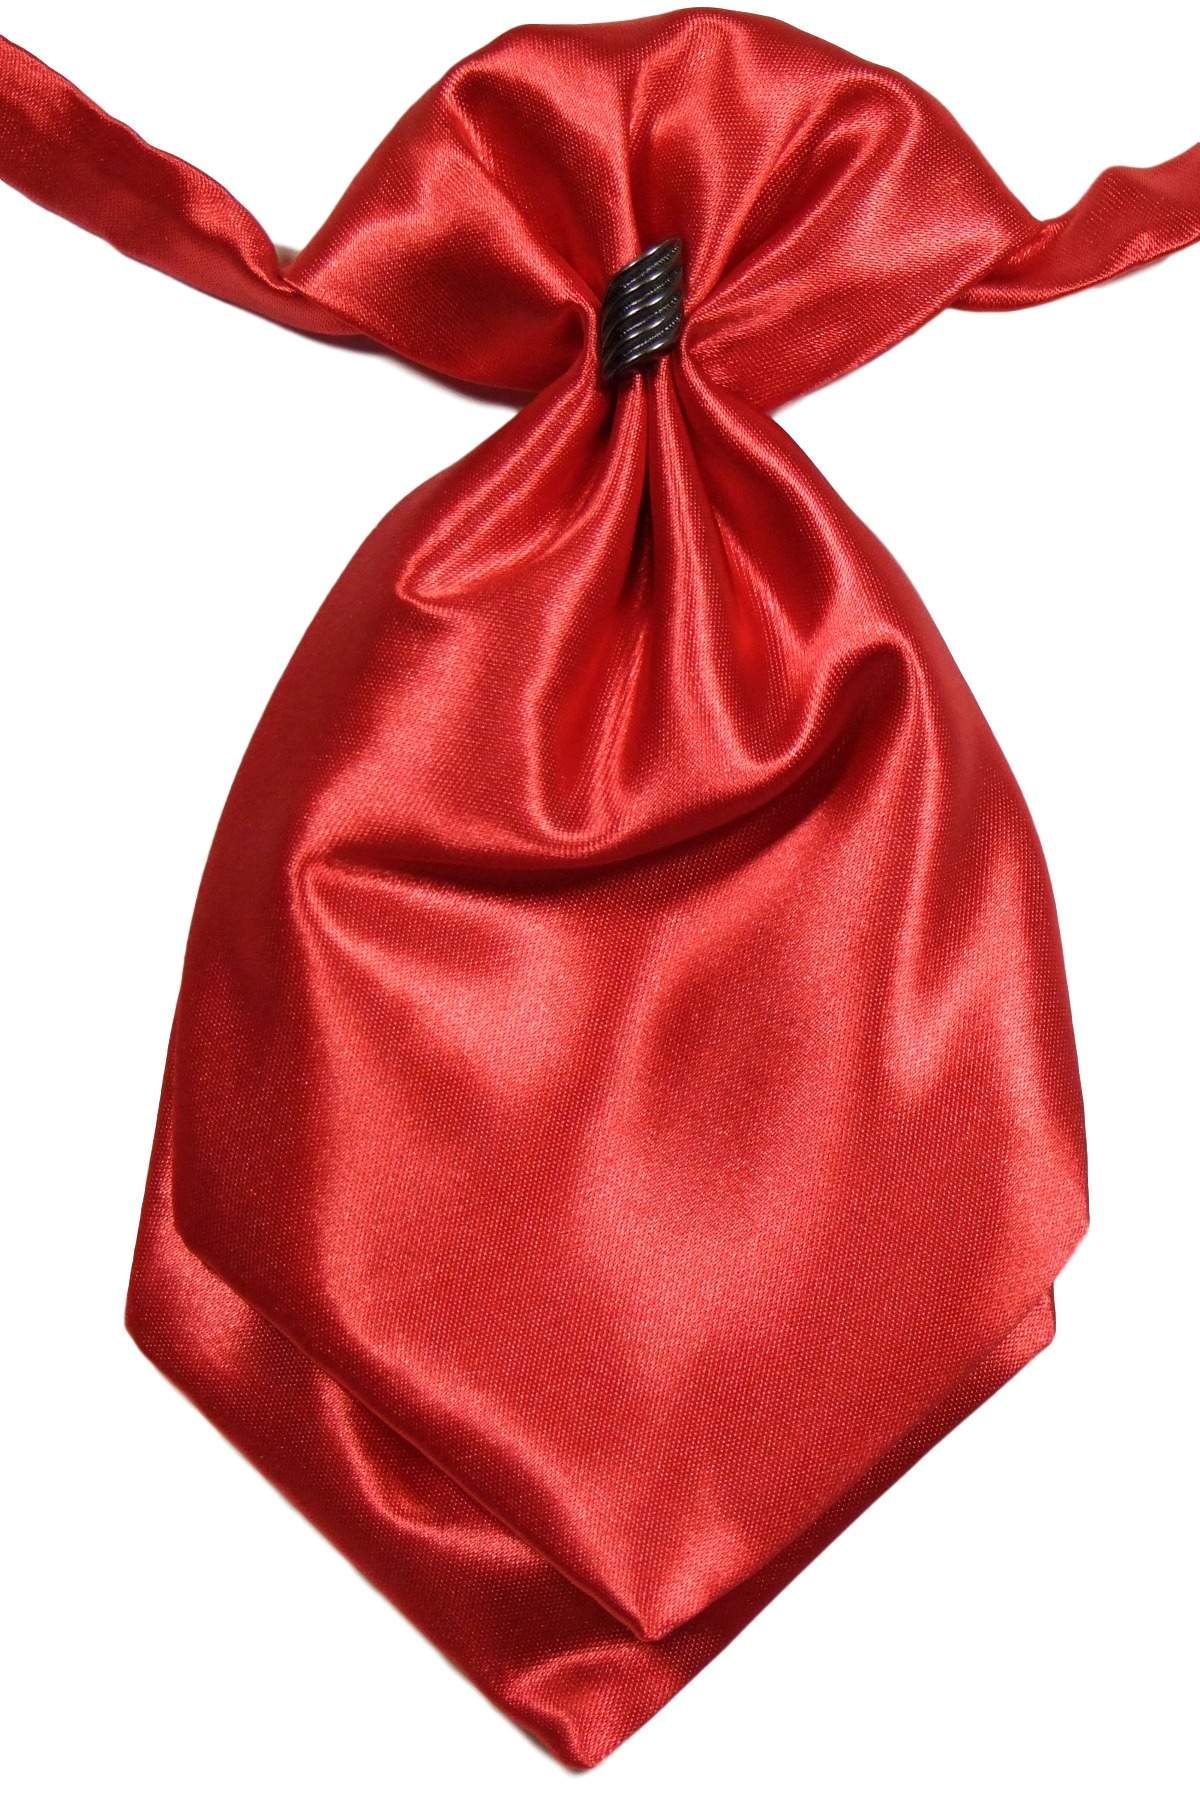 schuif lava Gelukkig Jongens plastron rood satijn-16-s - Stephanie's Bruidsmode -  Kinderfeestkleding - Bruidsstyling